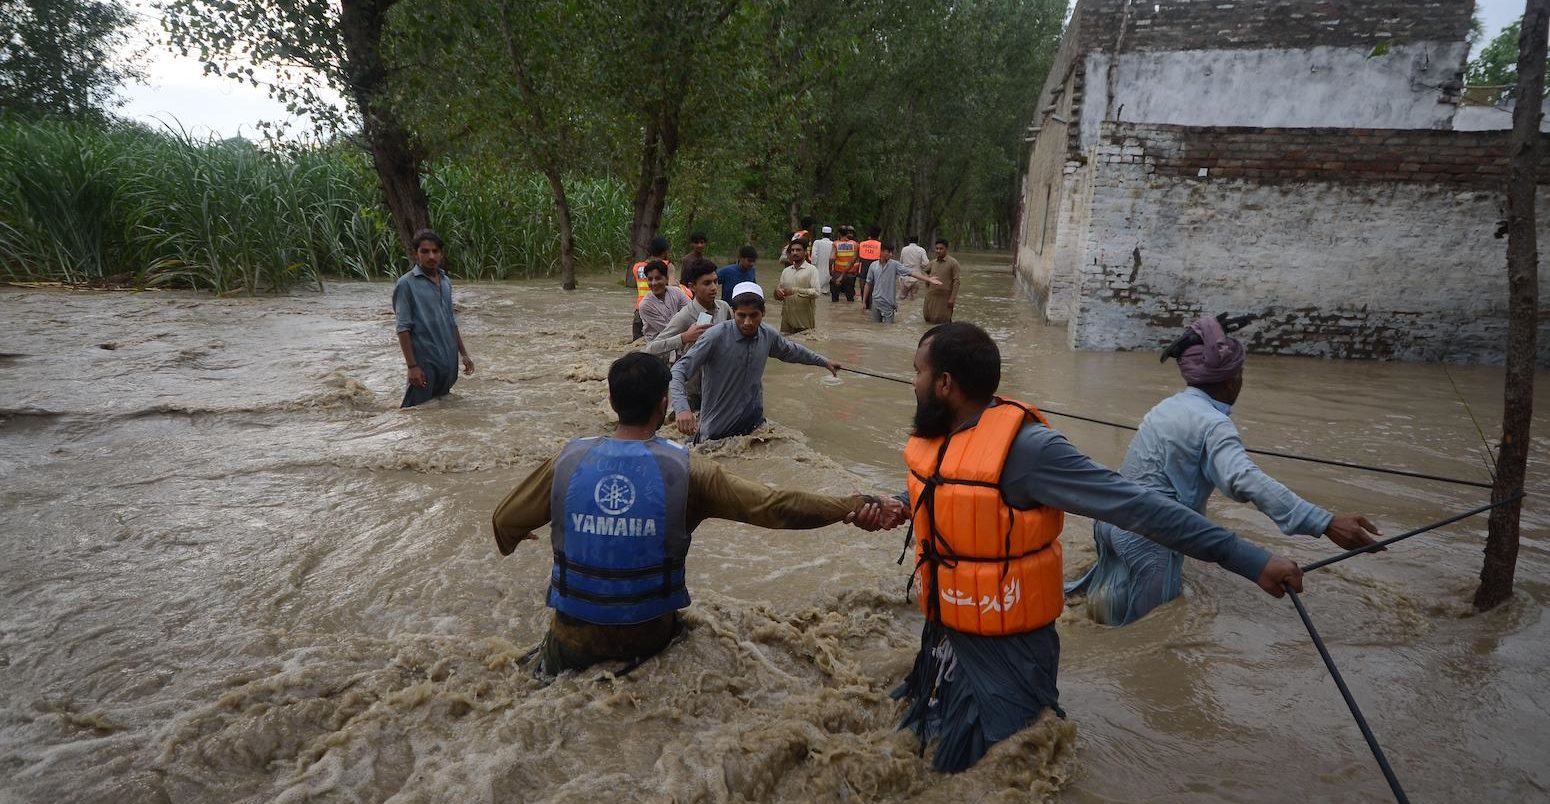 Citizens make their way through flooded streets with difficulty in the Dagai Mukaram Khan region, Pakistan.